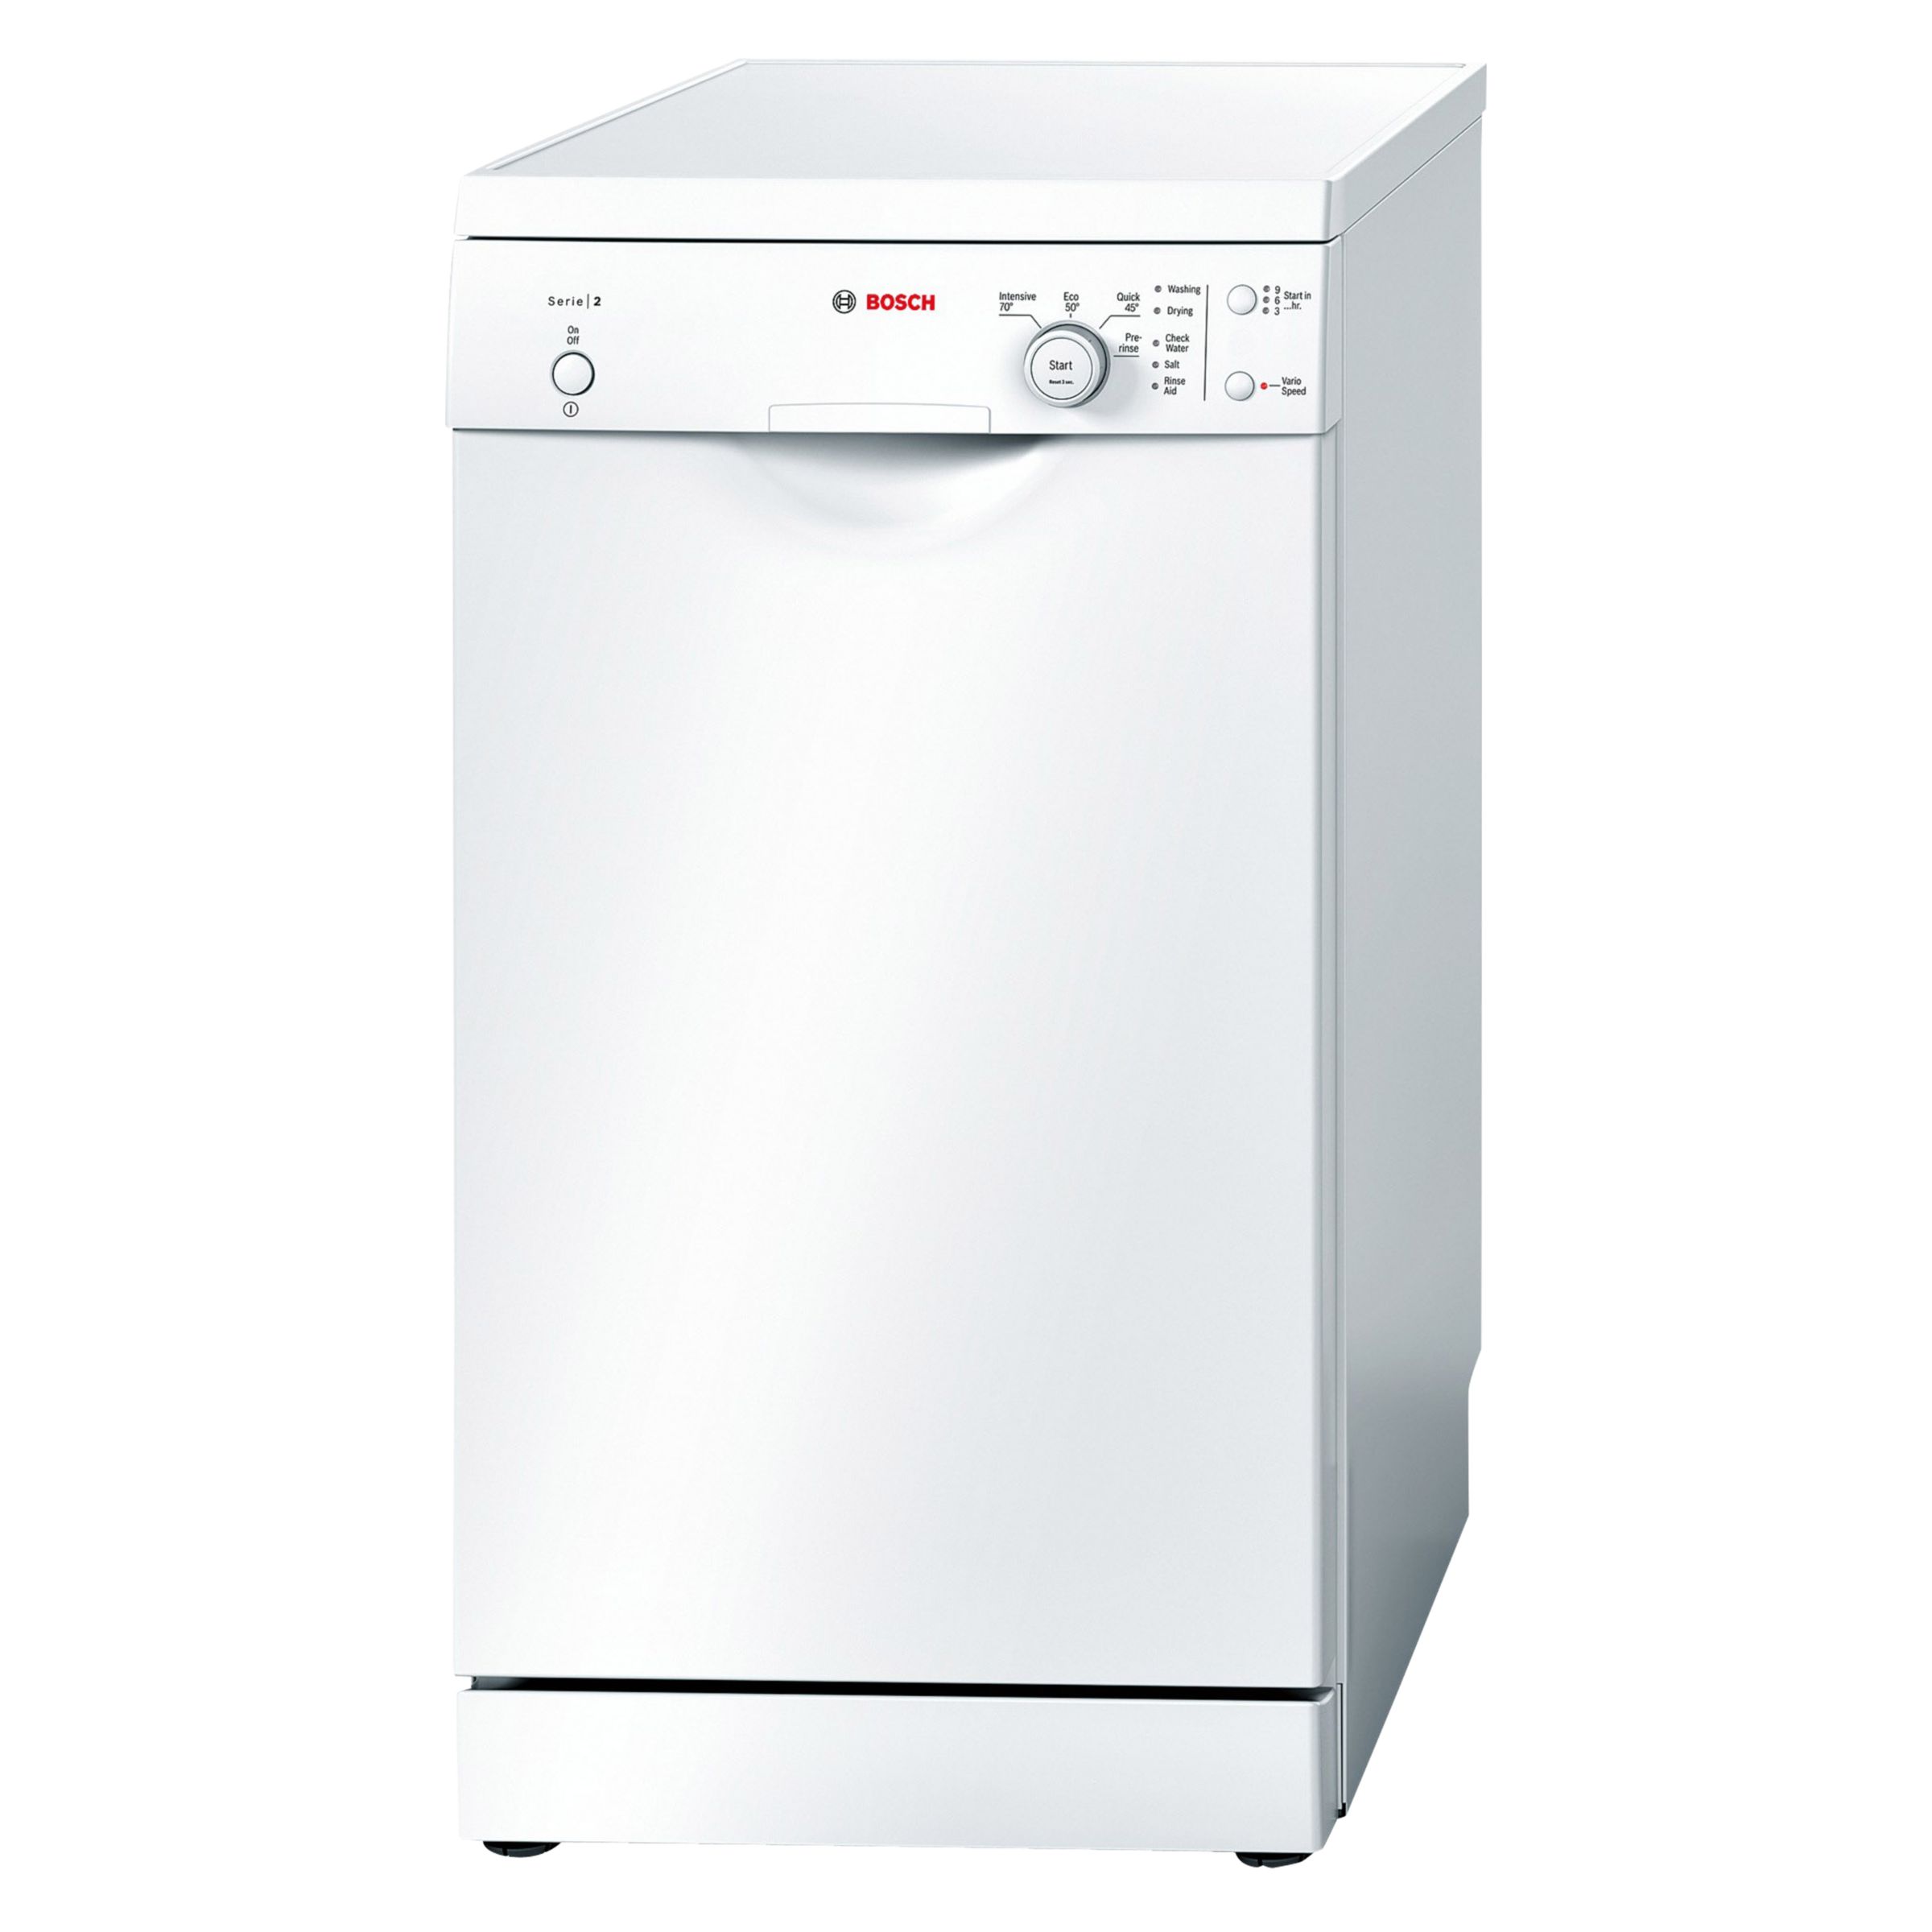 Bosch SPS40E32GB Slimline Freestanding Dishwasher in White